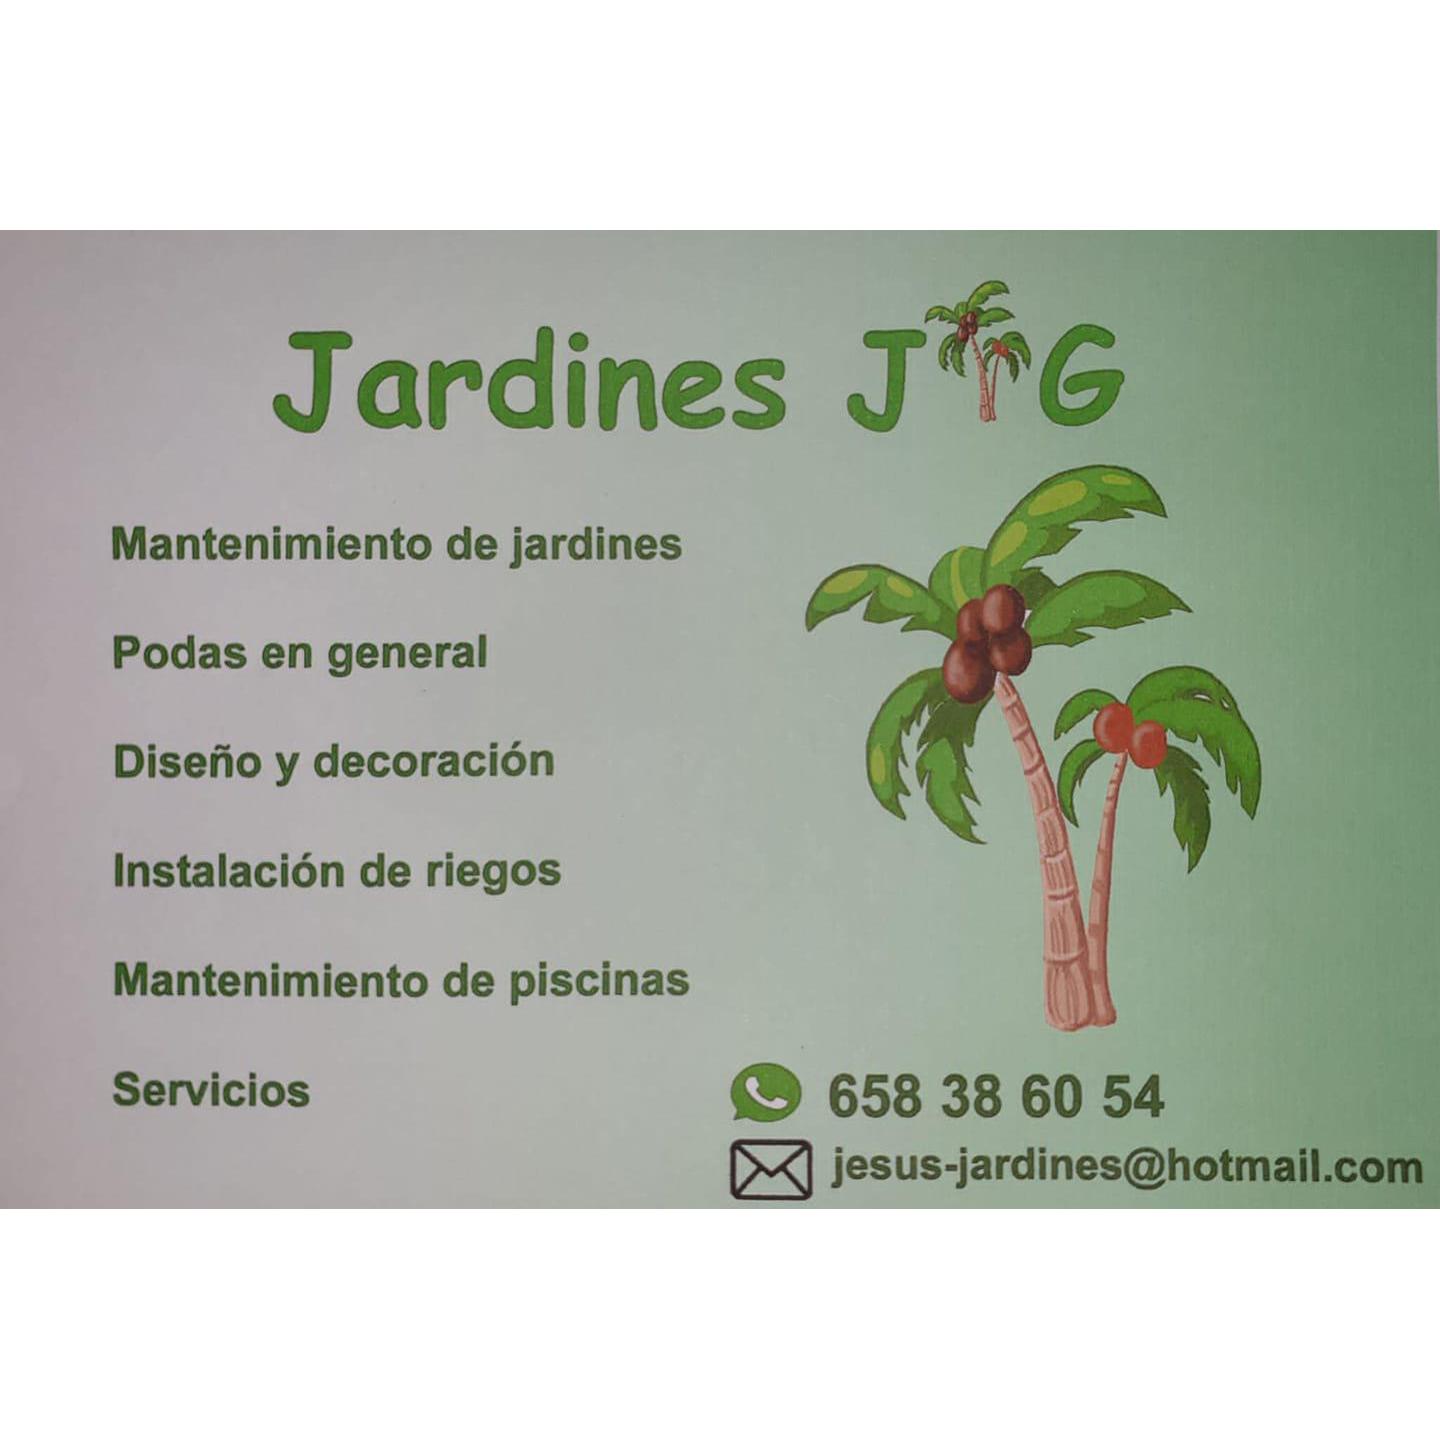 Jardineria JG El Toro